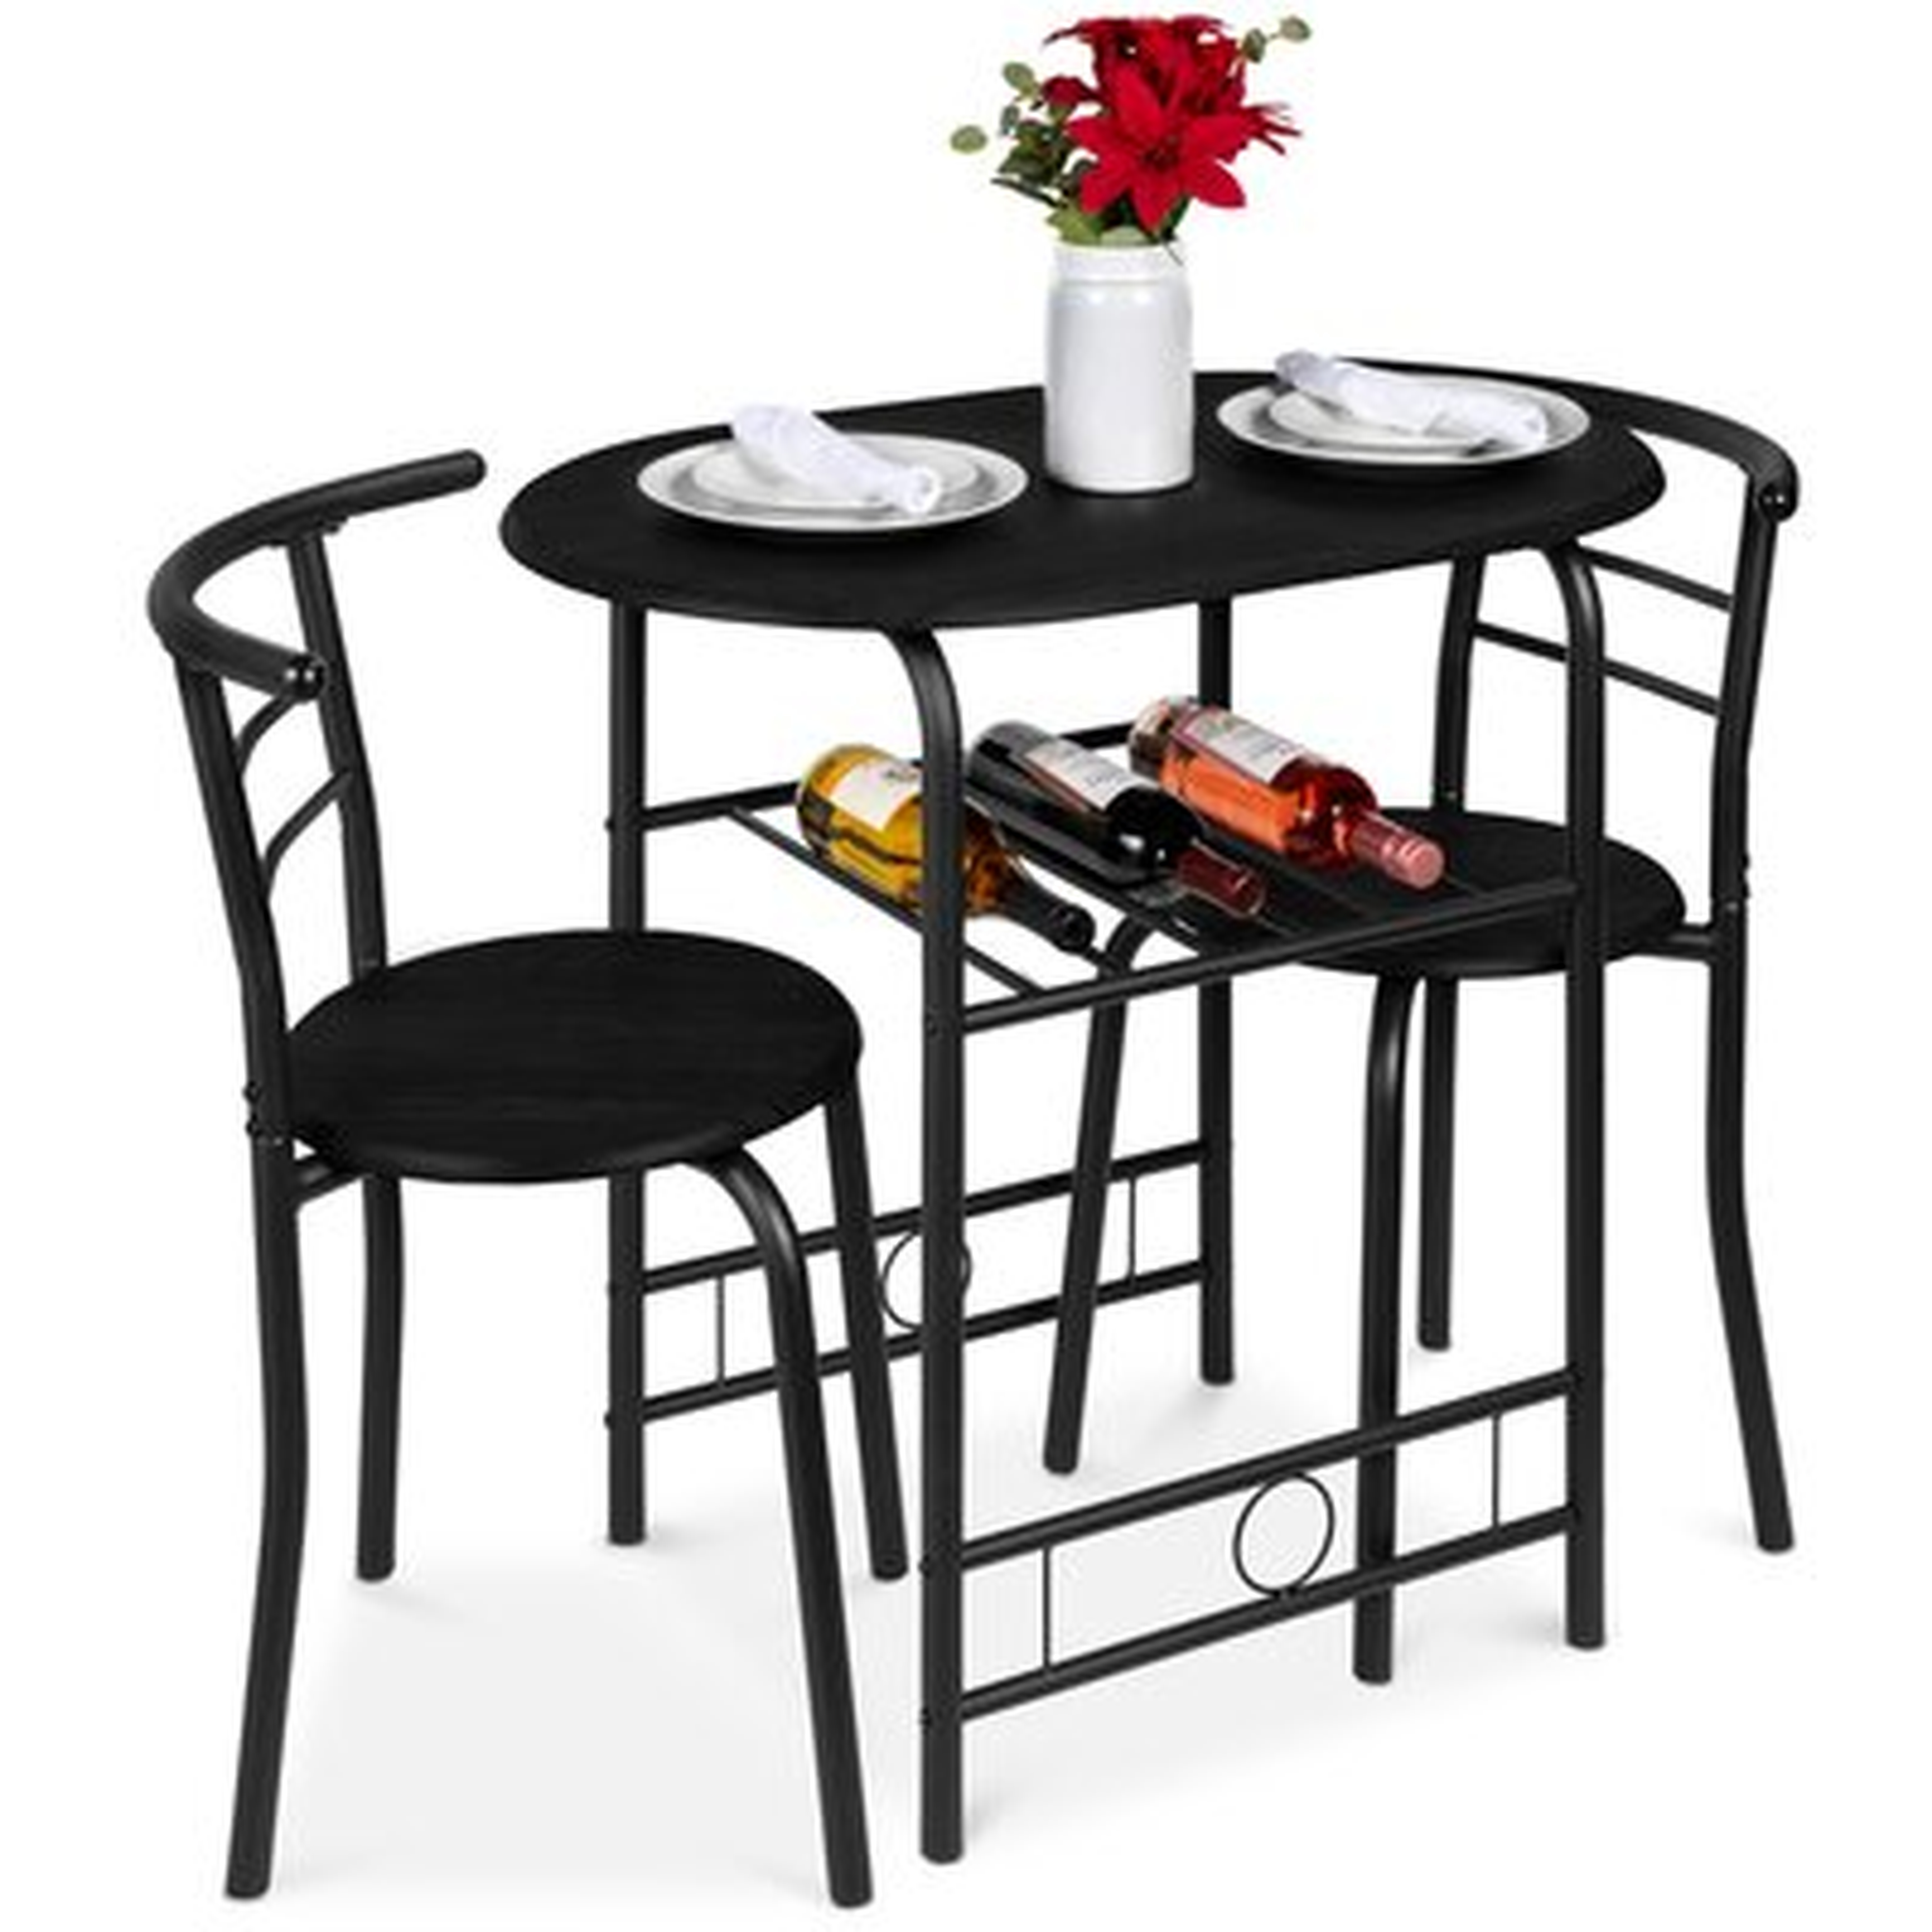 Ebern Designs 3-Piece Wood Dining Room Round Table & Chairs Set W/ Steel Frame, Built-In Wine Rack - Black/Silver - Wayfair